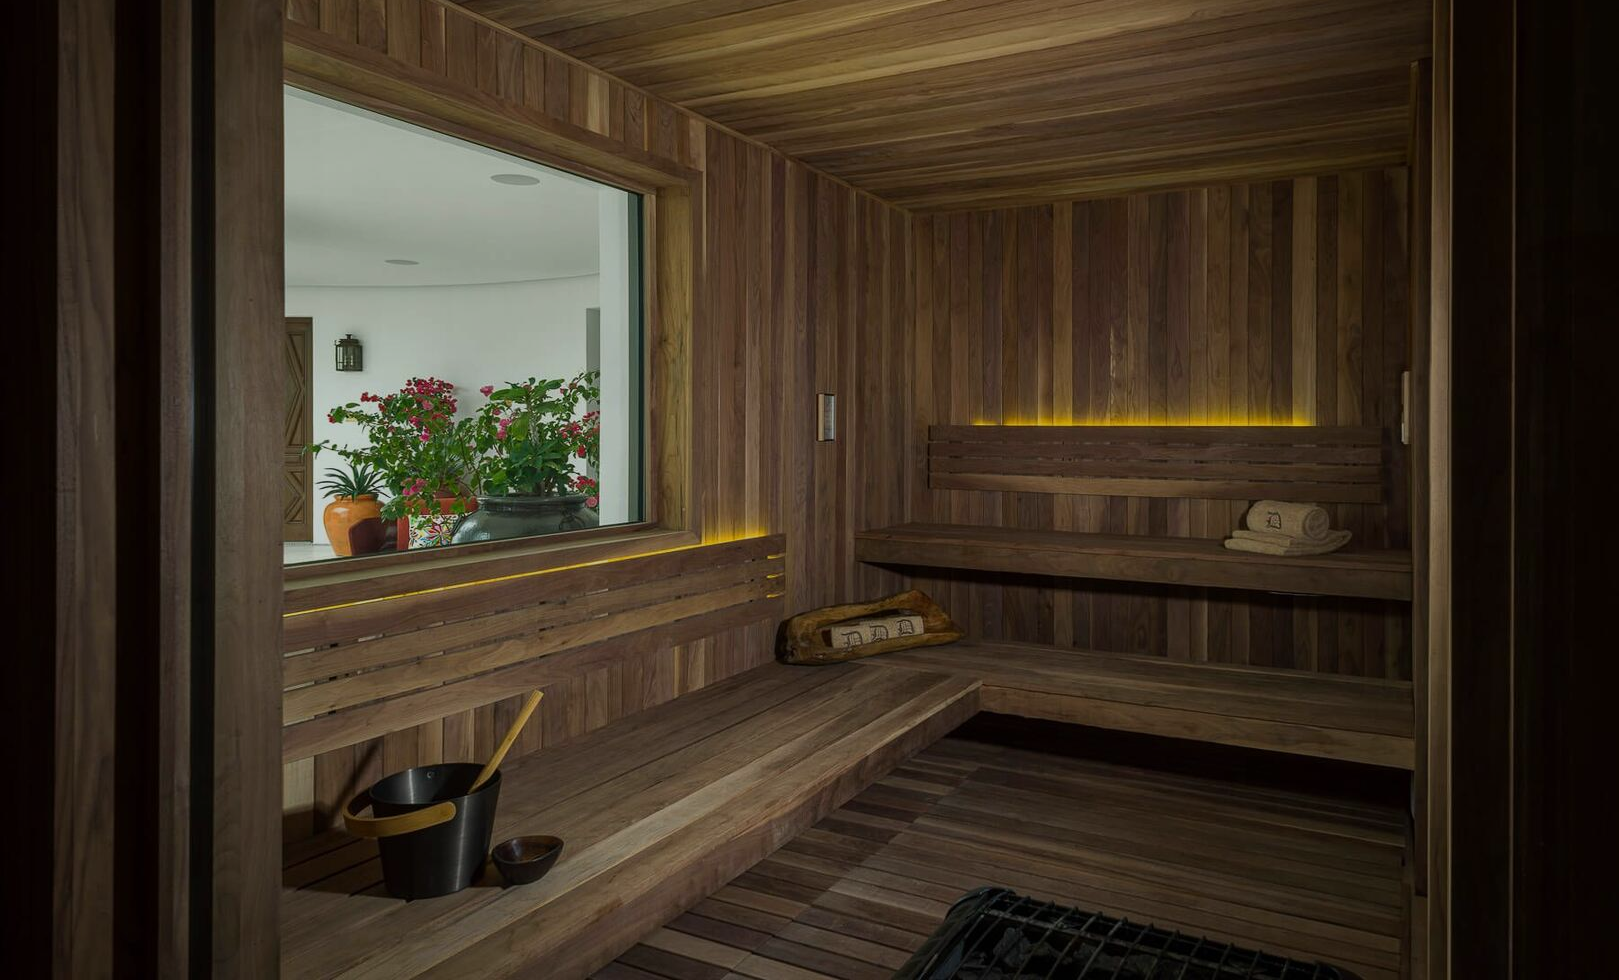 8 Exclusive Oceanview Villas With In-Home Saunas